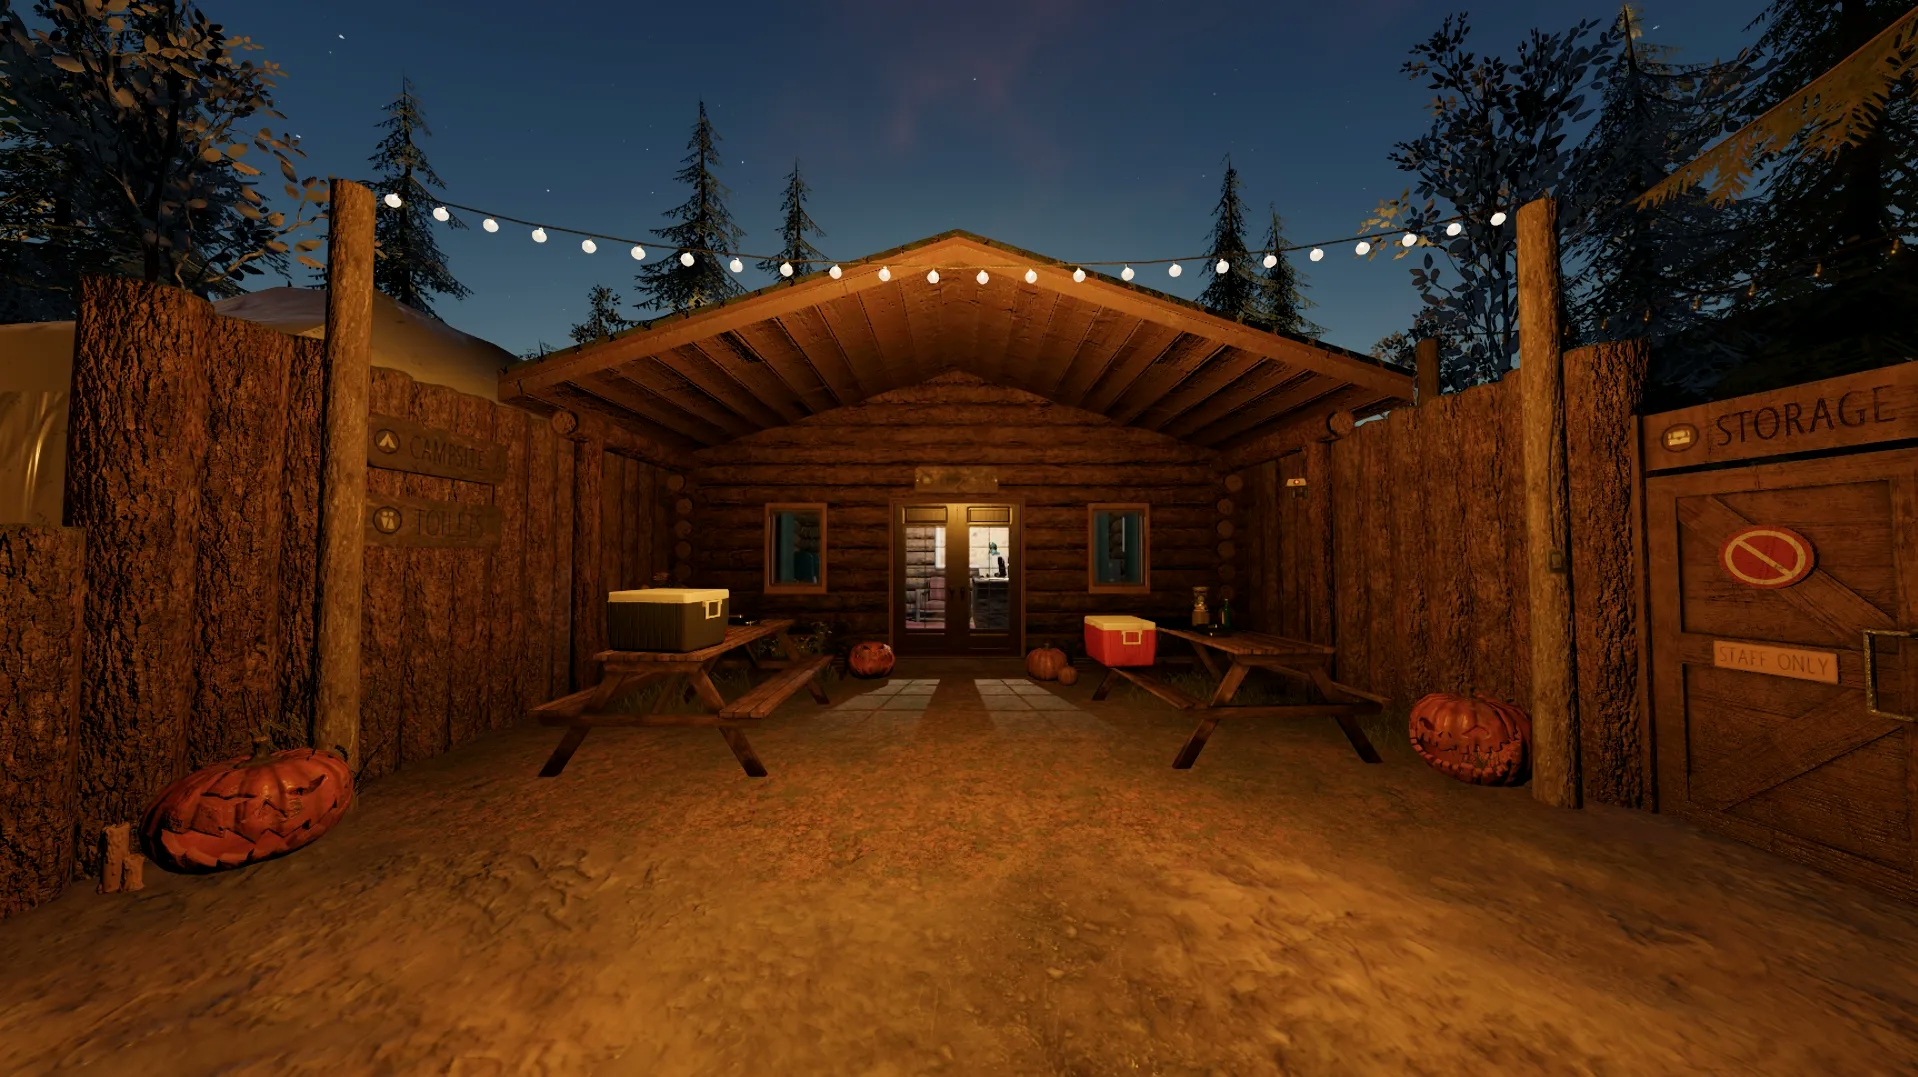 Maple Lodge Campsite